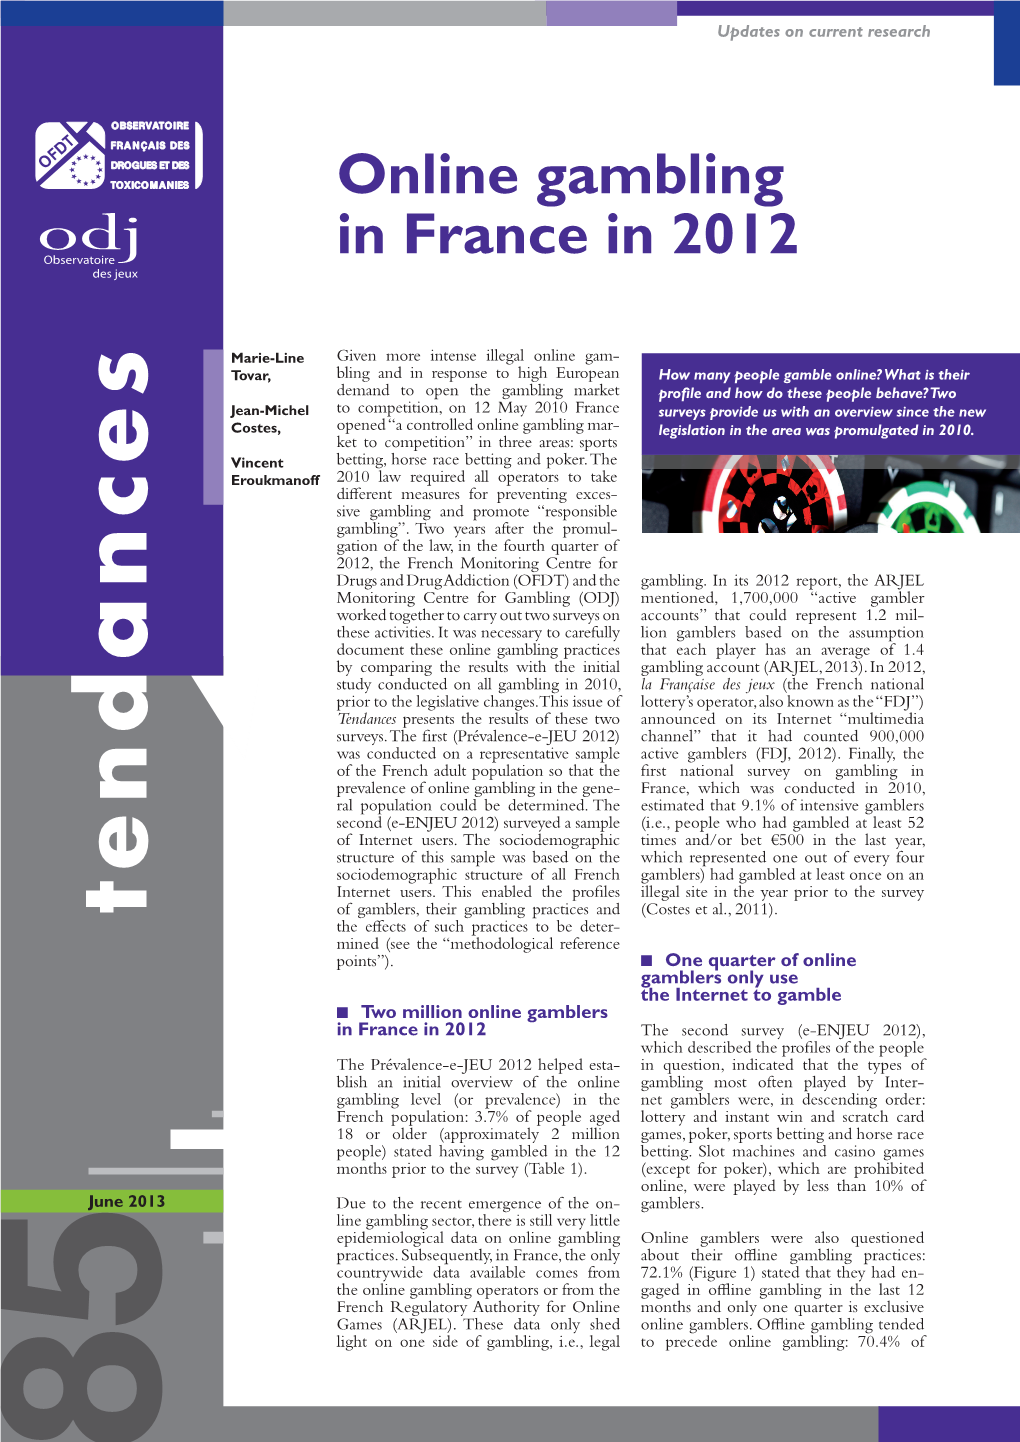 Online Gambling in France in 2012